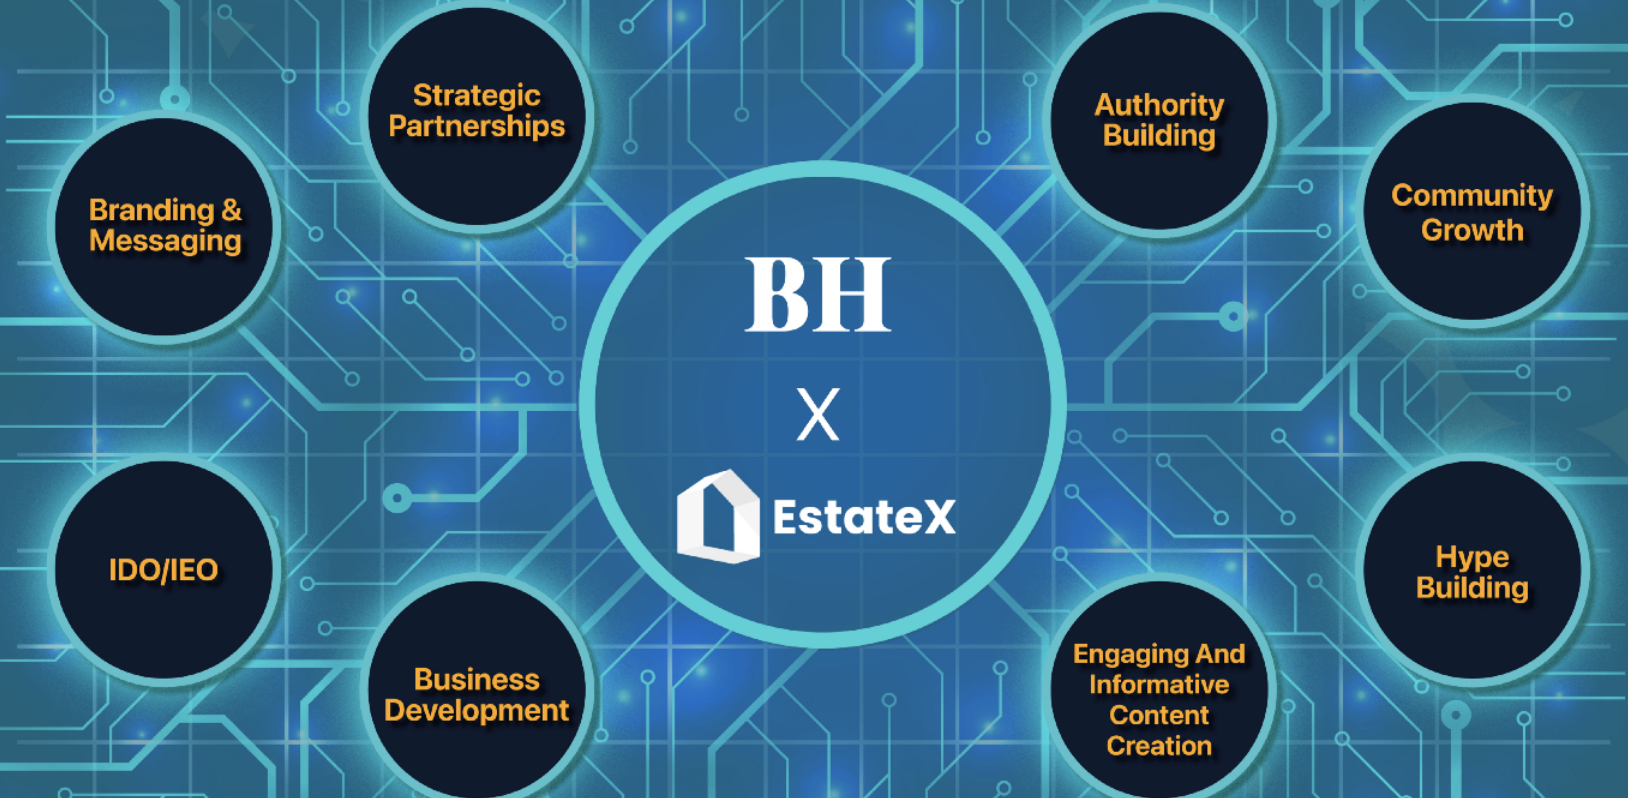 BH Partnership with EstateX